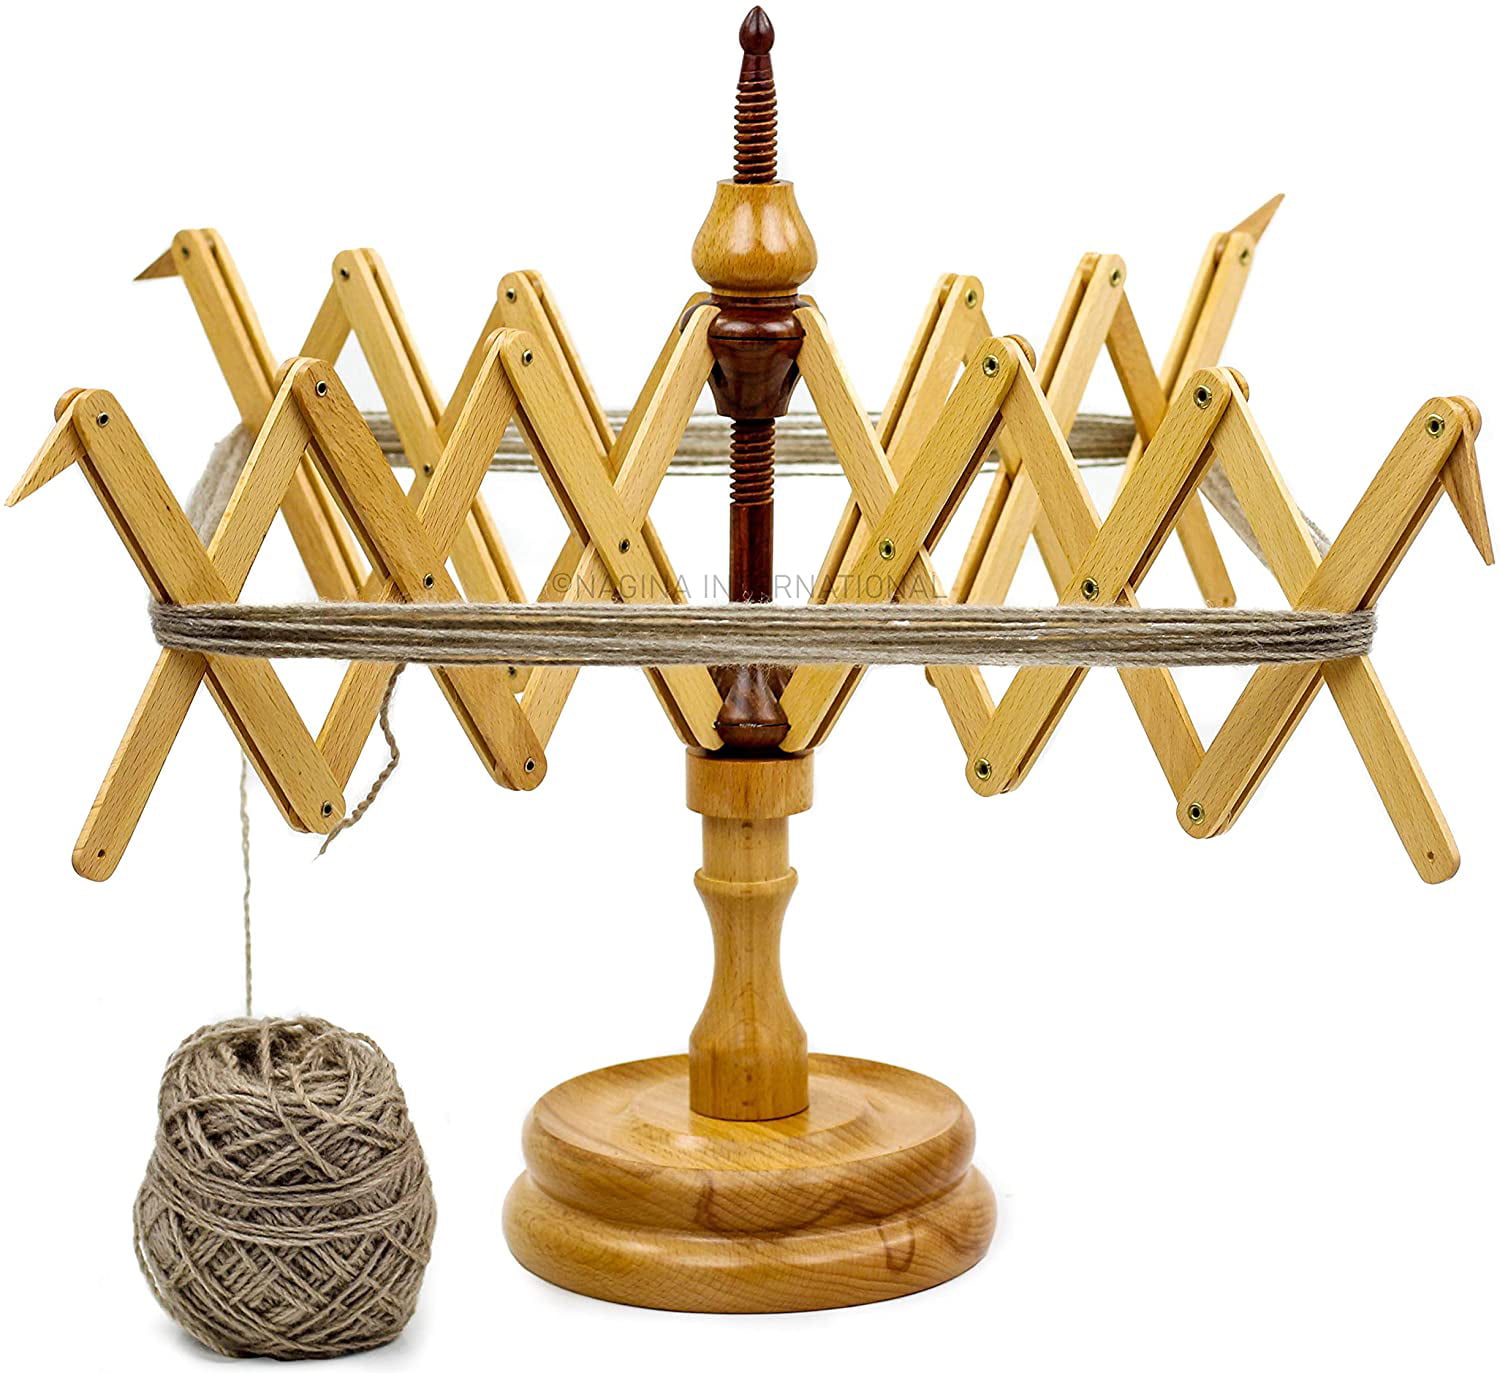 Wooden Yarn Swift Umbrella Swift Yarn Winder - Umbrella Table Top Yarn  Swift - Wooden Yarn Winder and Swift - Knitting Crocheting & Spinning  Winders 